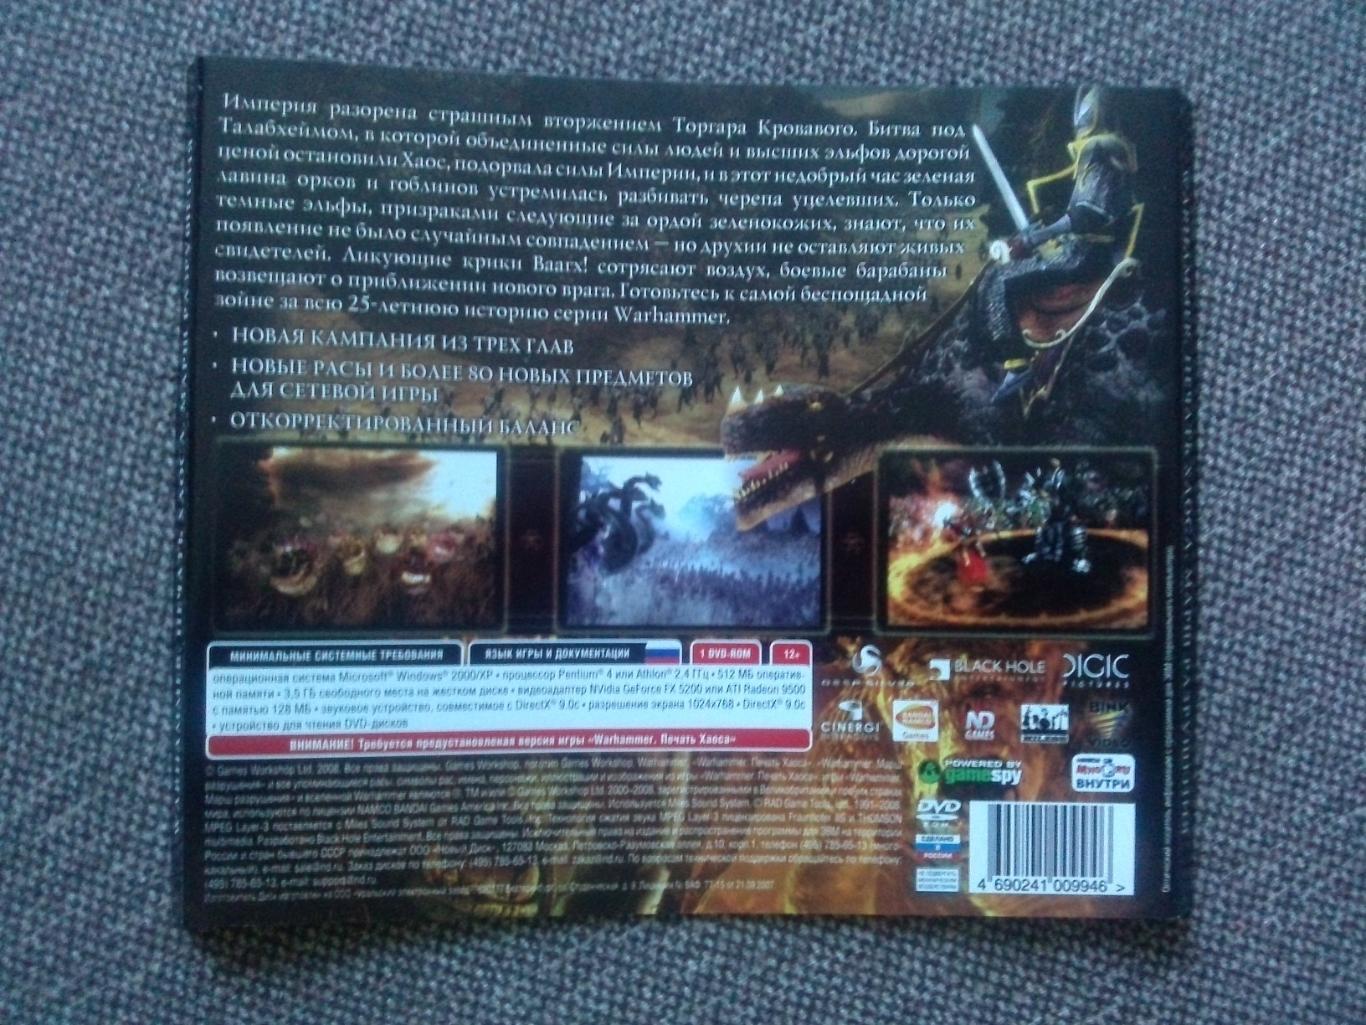 PC DVD ROM :Warhammer - Печать хаоса - Марш разрушениялицензия (Игра) 6